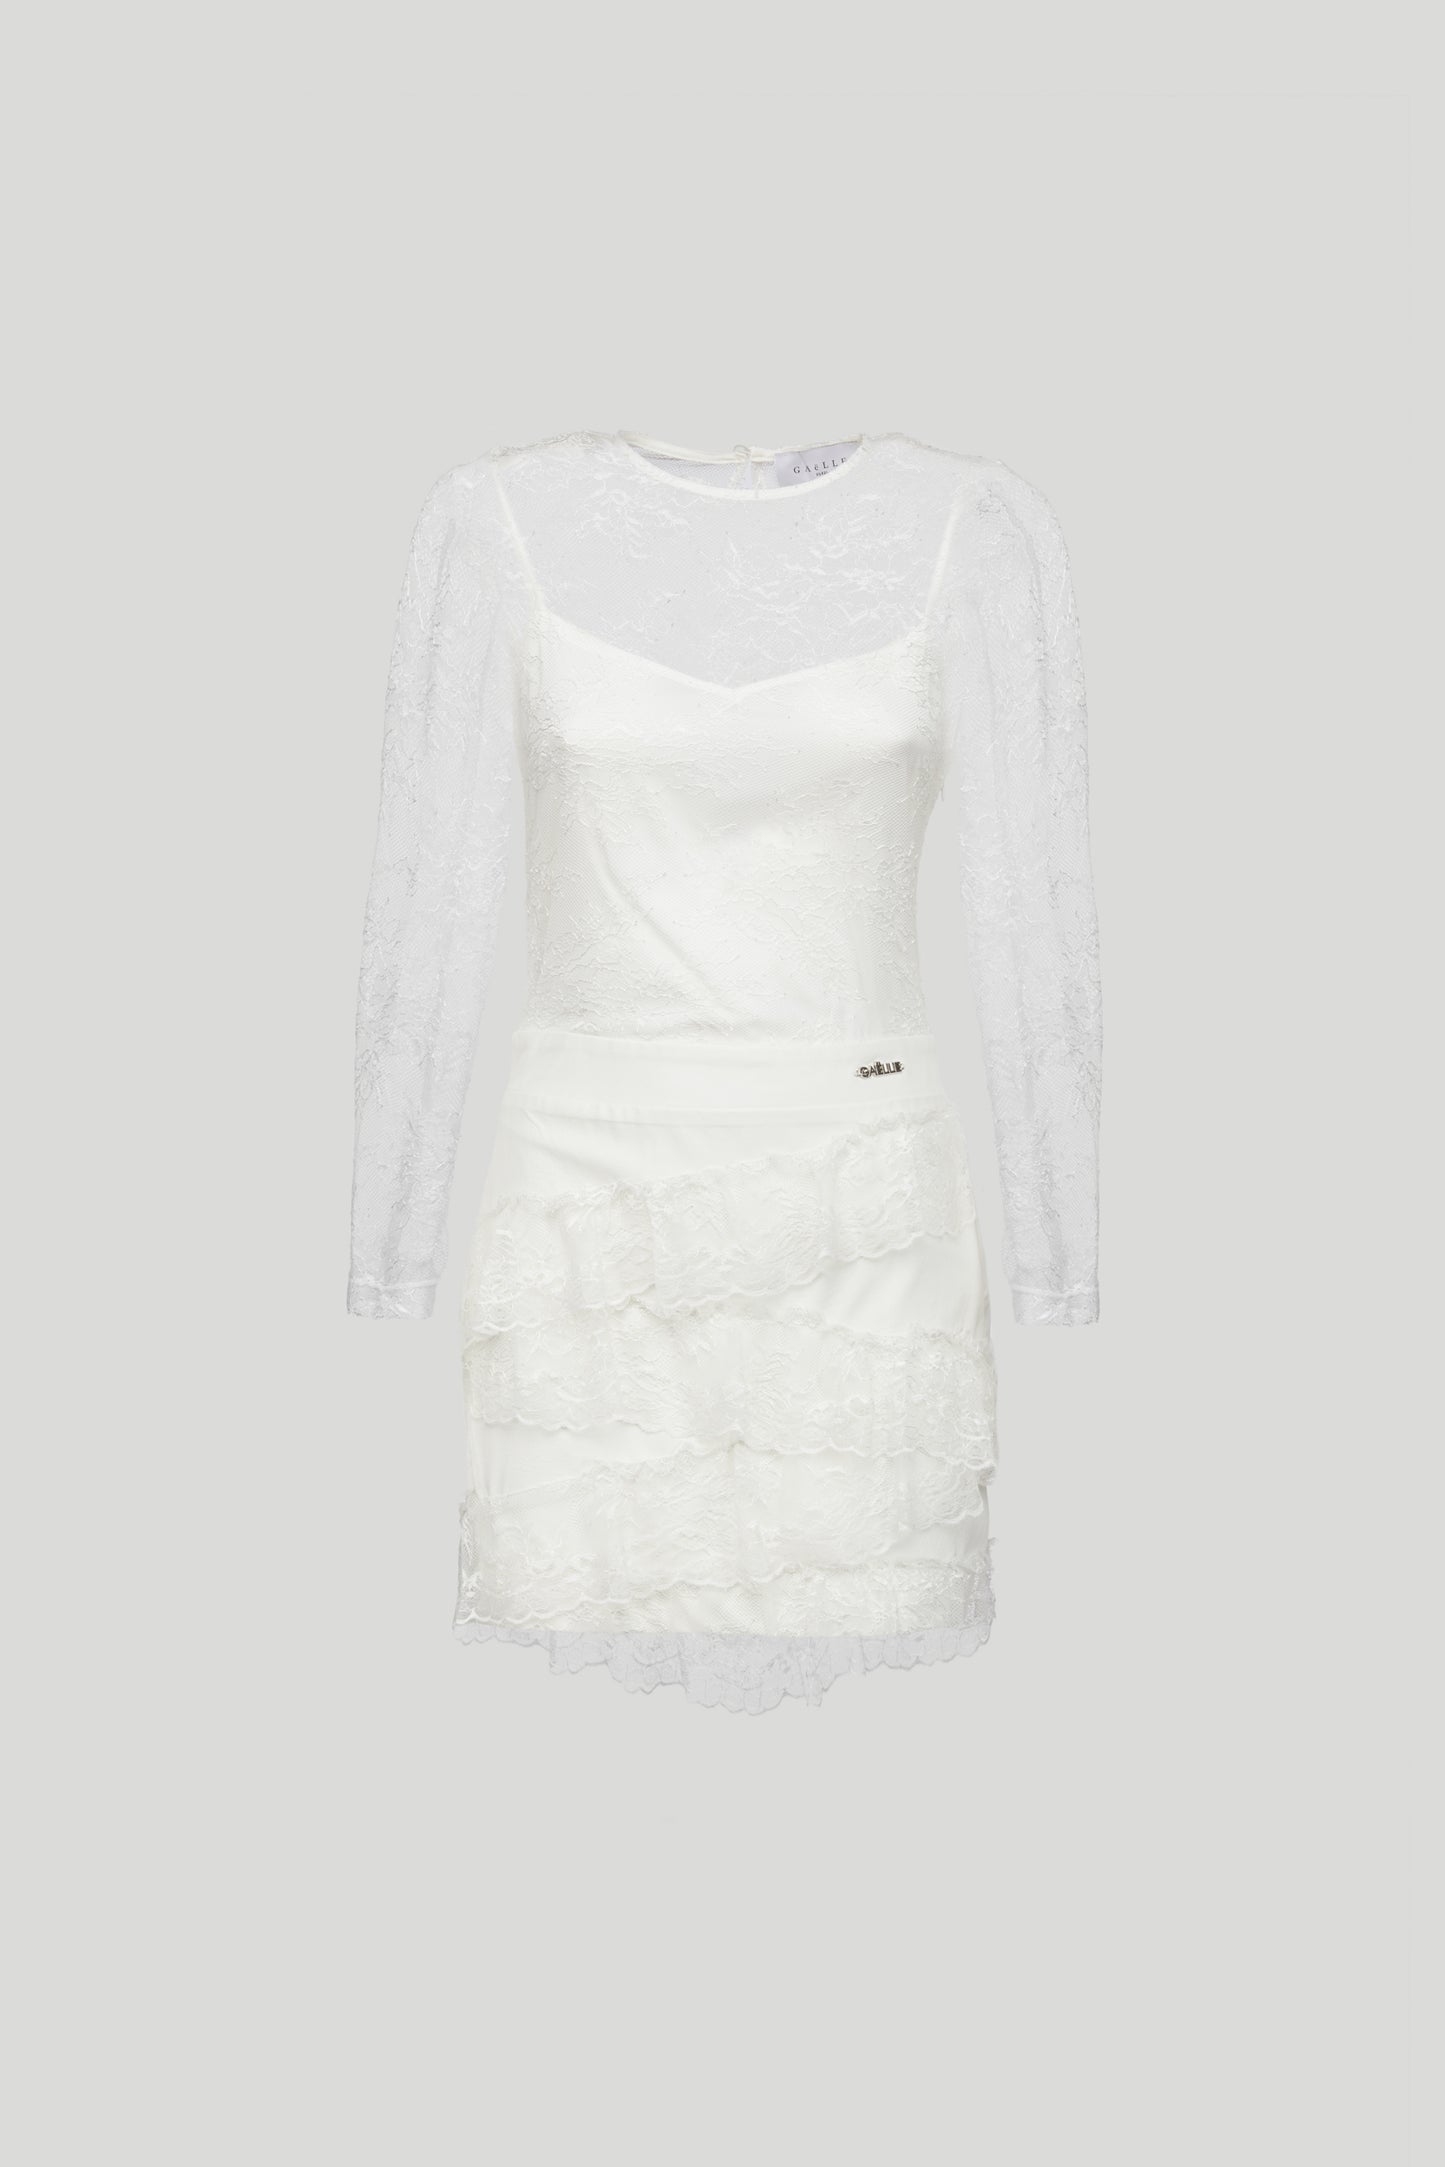 GAELLE White Lace Dress